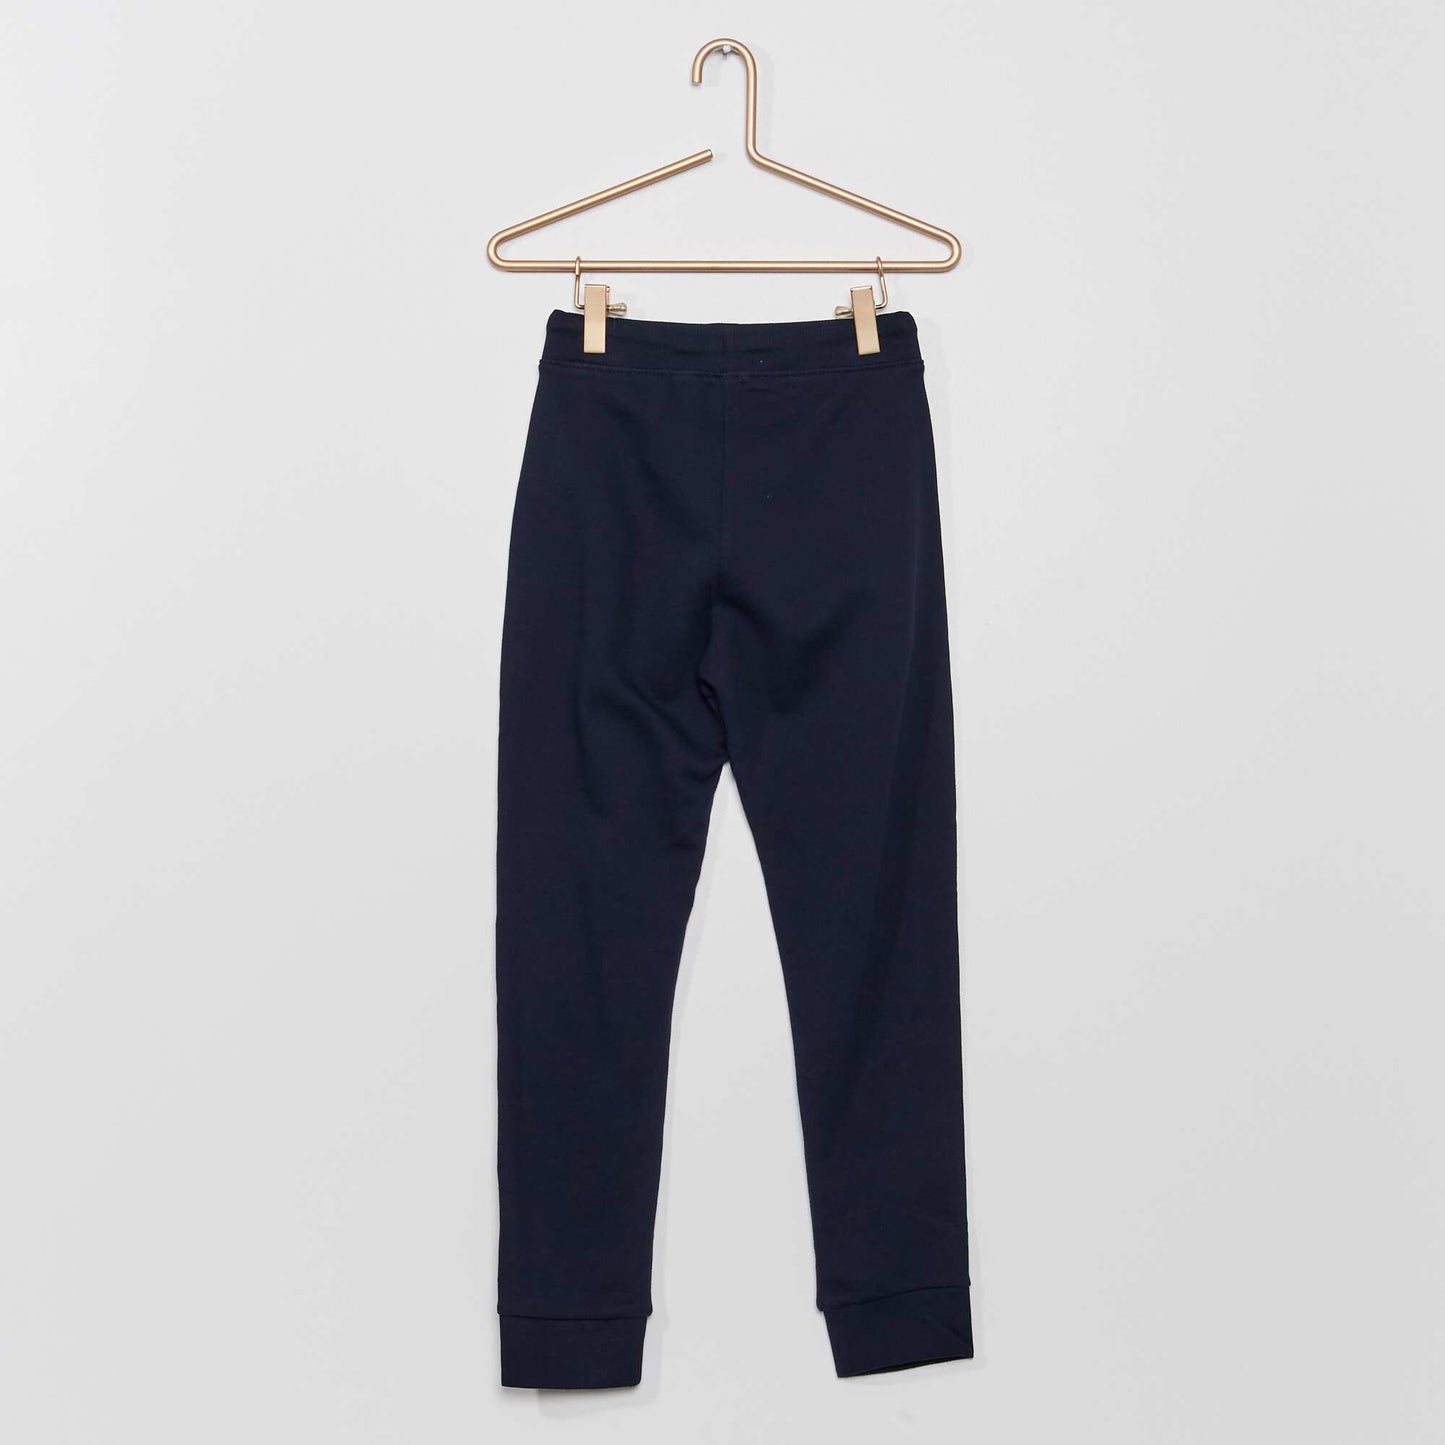 Pantalon de jogging en coton uni bleu marine